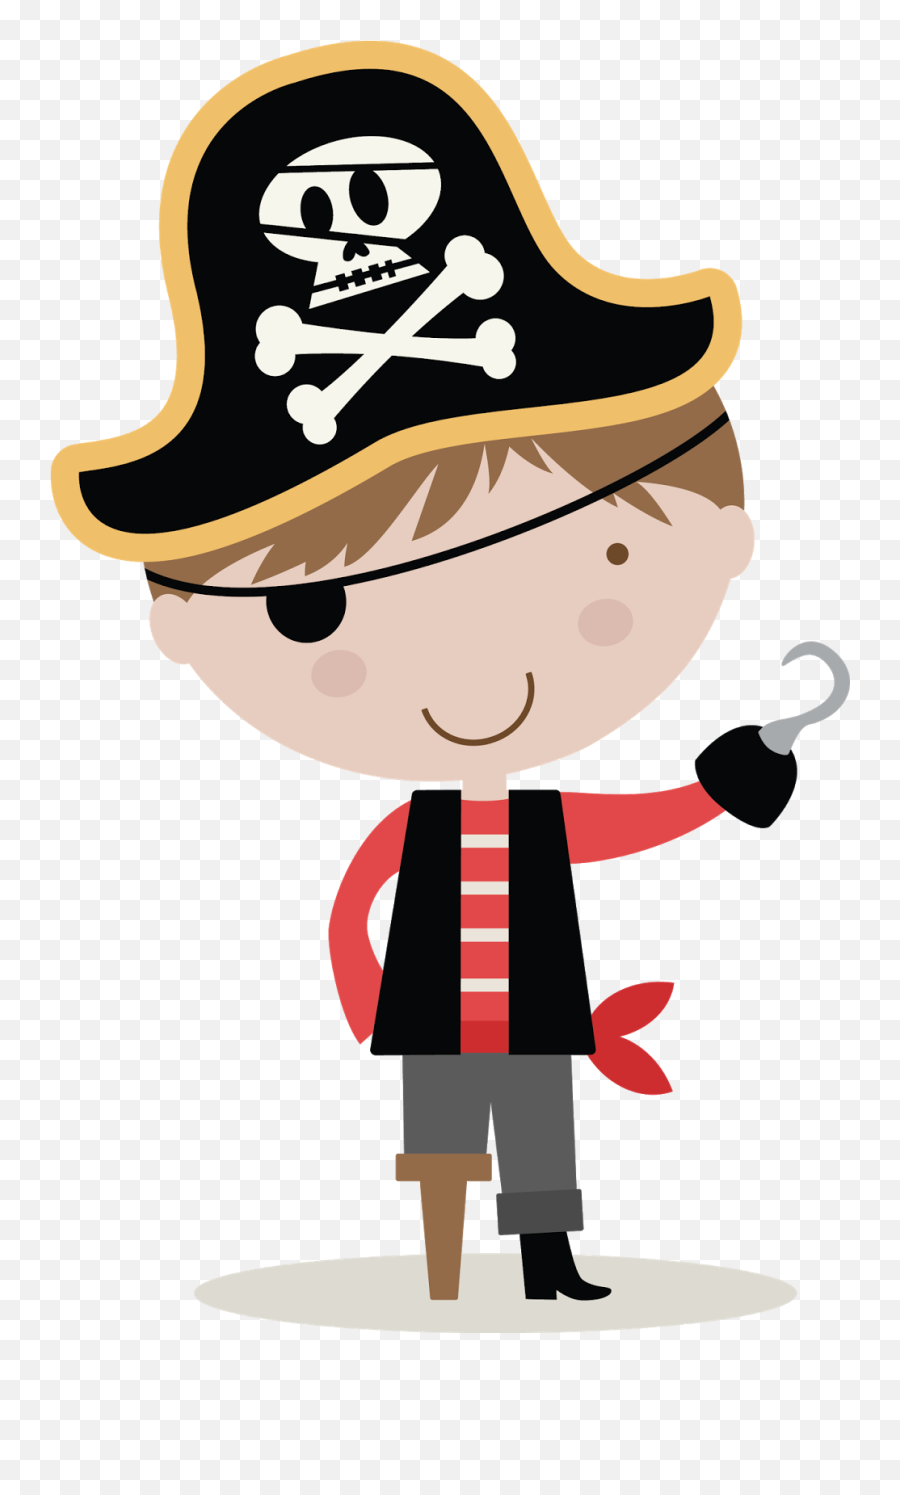 Pictures Of A Pirate - Transparent Background Pirate Clipart Emoji,Pirate Emoticon